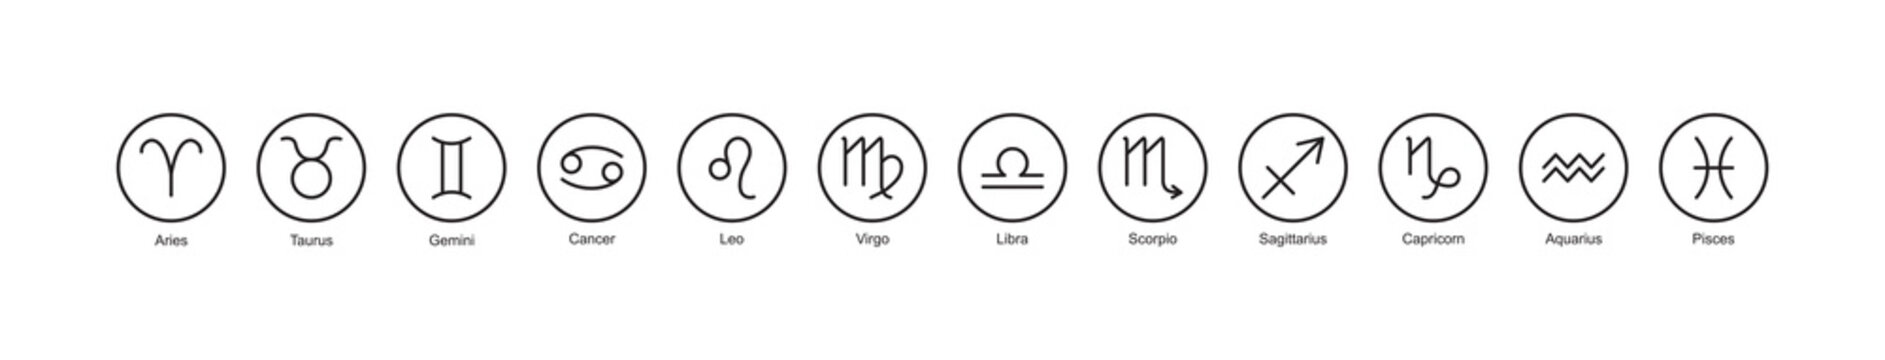 Zodiac sign vector, horoscope icon, astrology star symbol, twelve element set, black circle pictogram isolated on white background. Simple line illustration